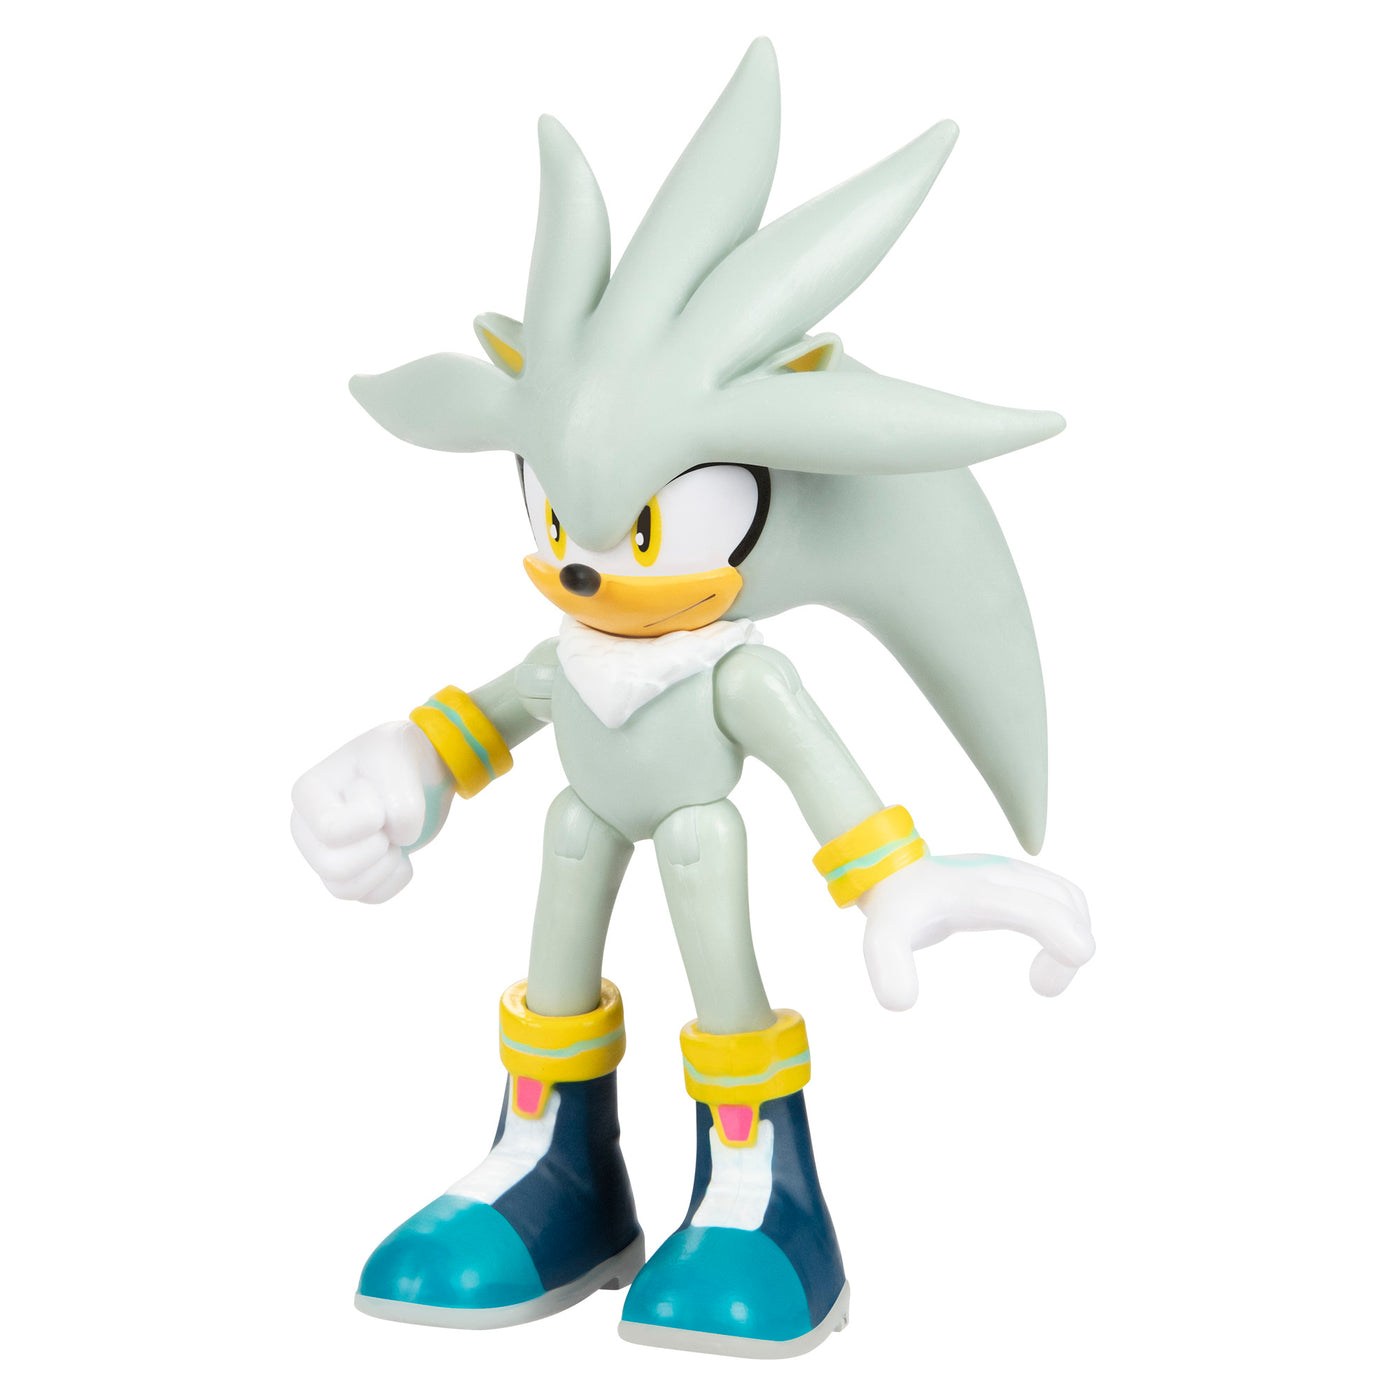 Sonic 2.5" Modern Silver Sonic